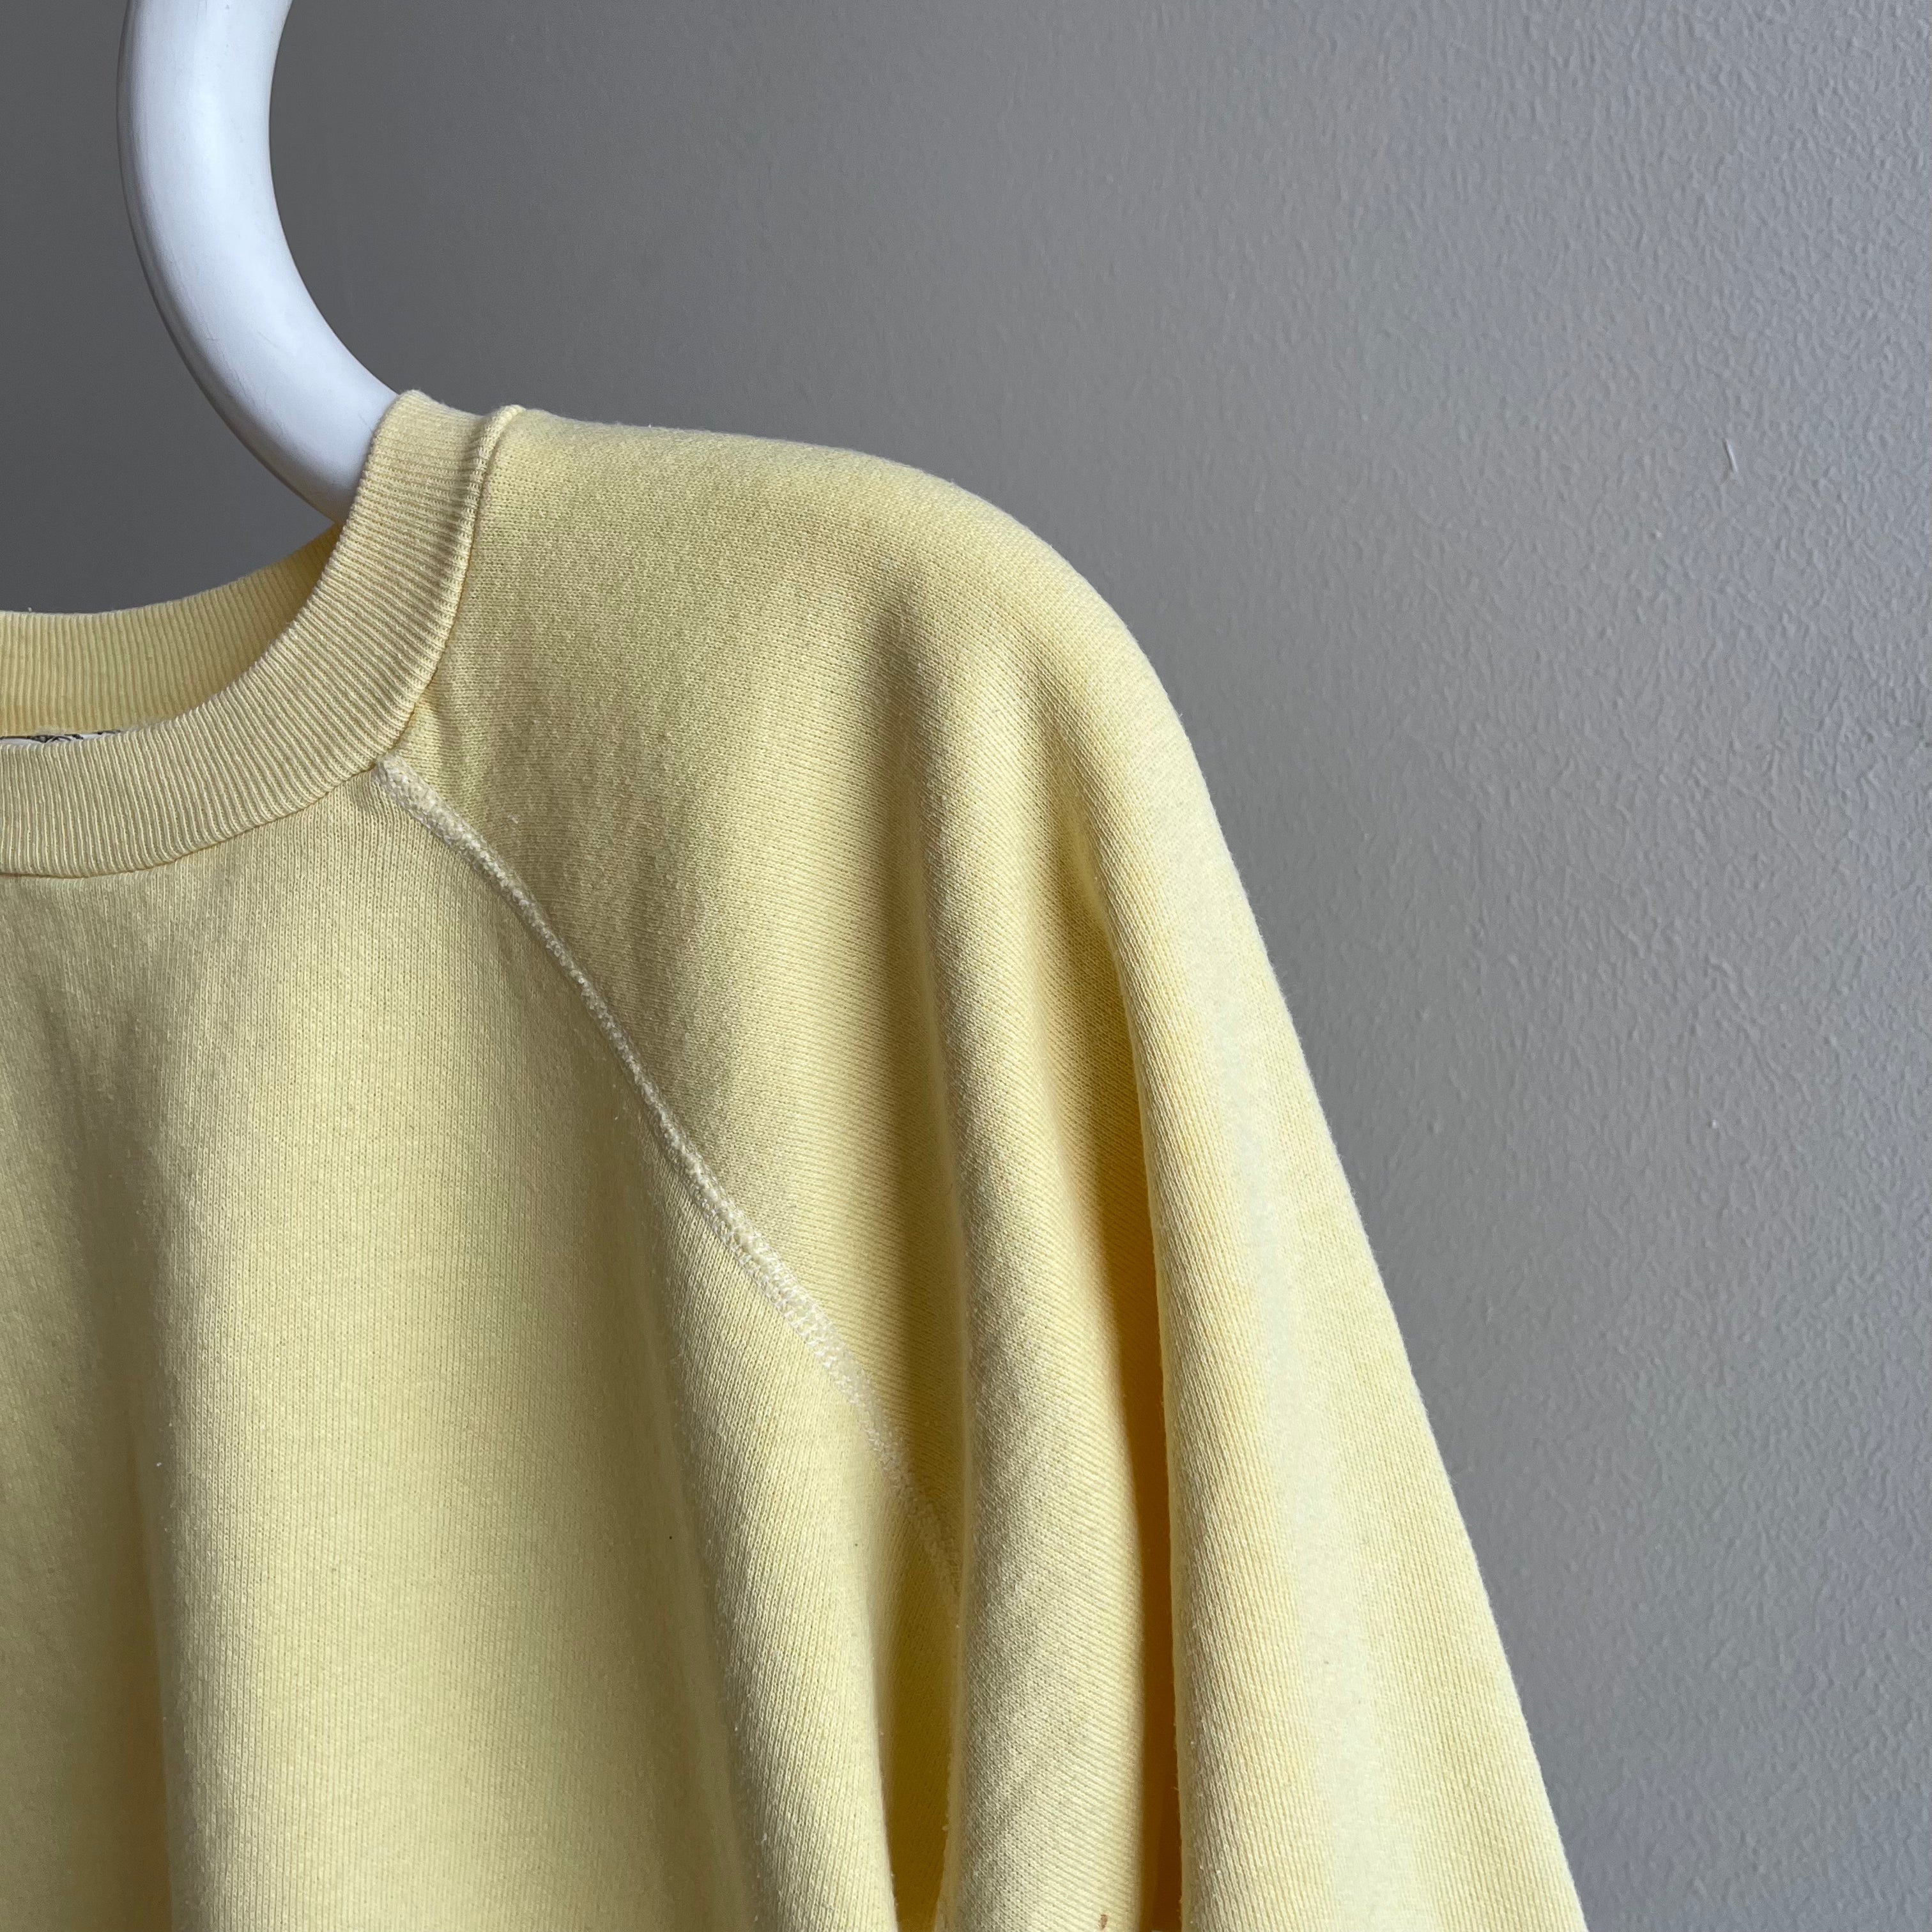 Sweat-shirt raglan vierge jaune beurre des années 1980 - oh mon